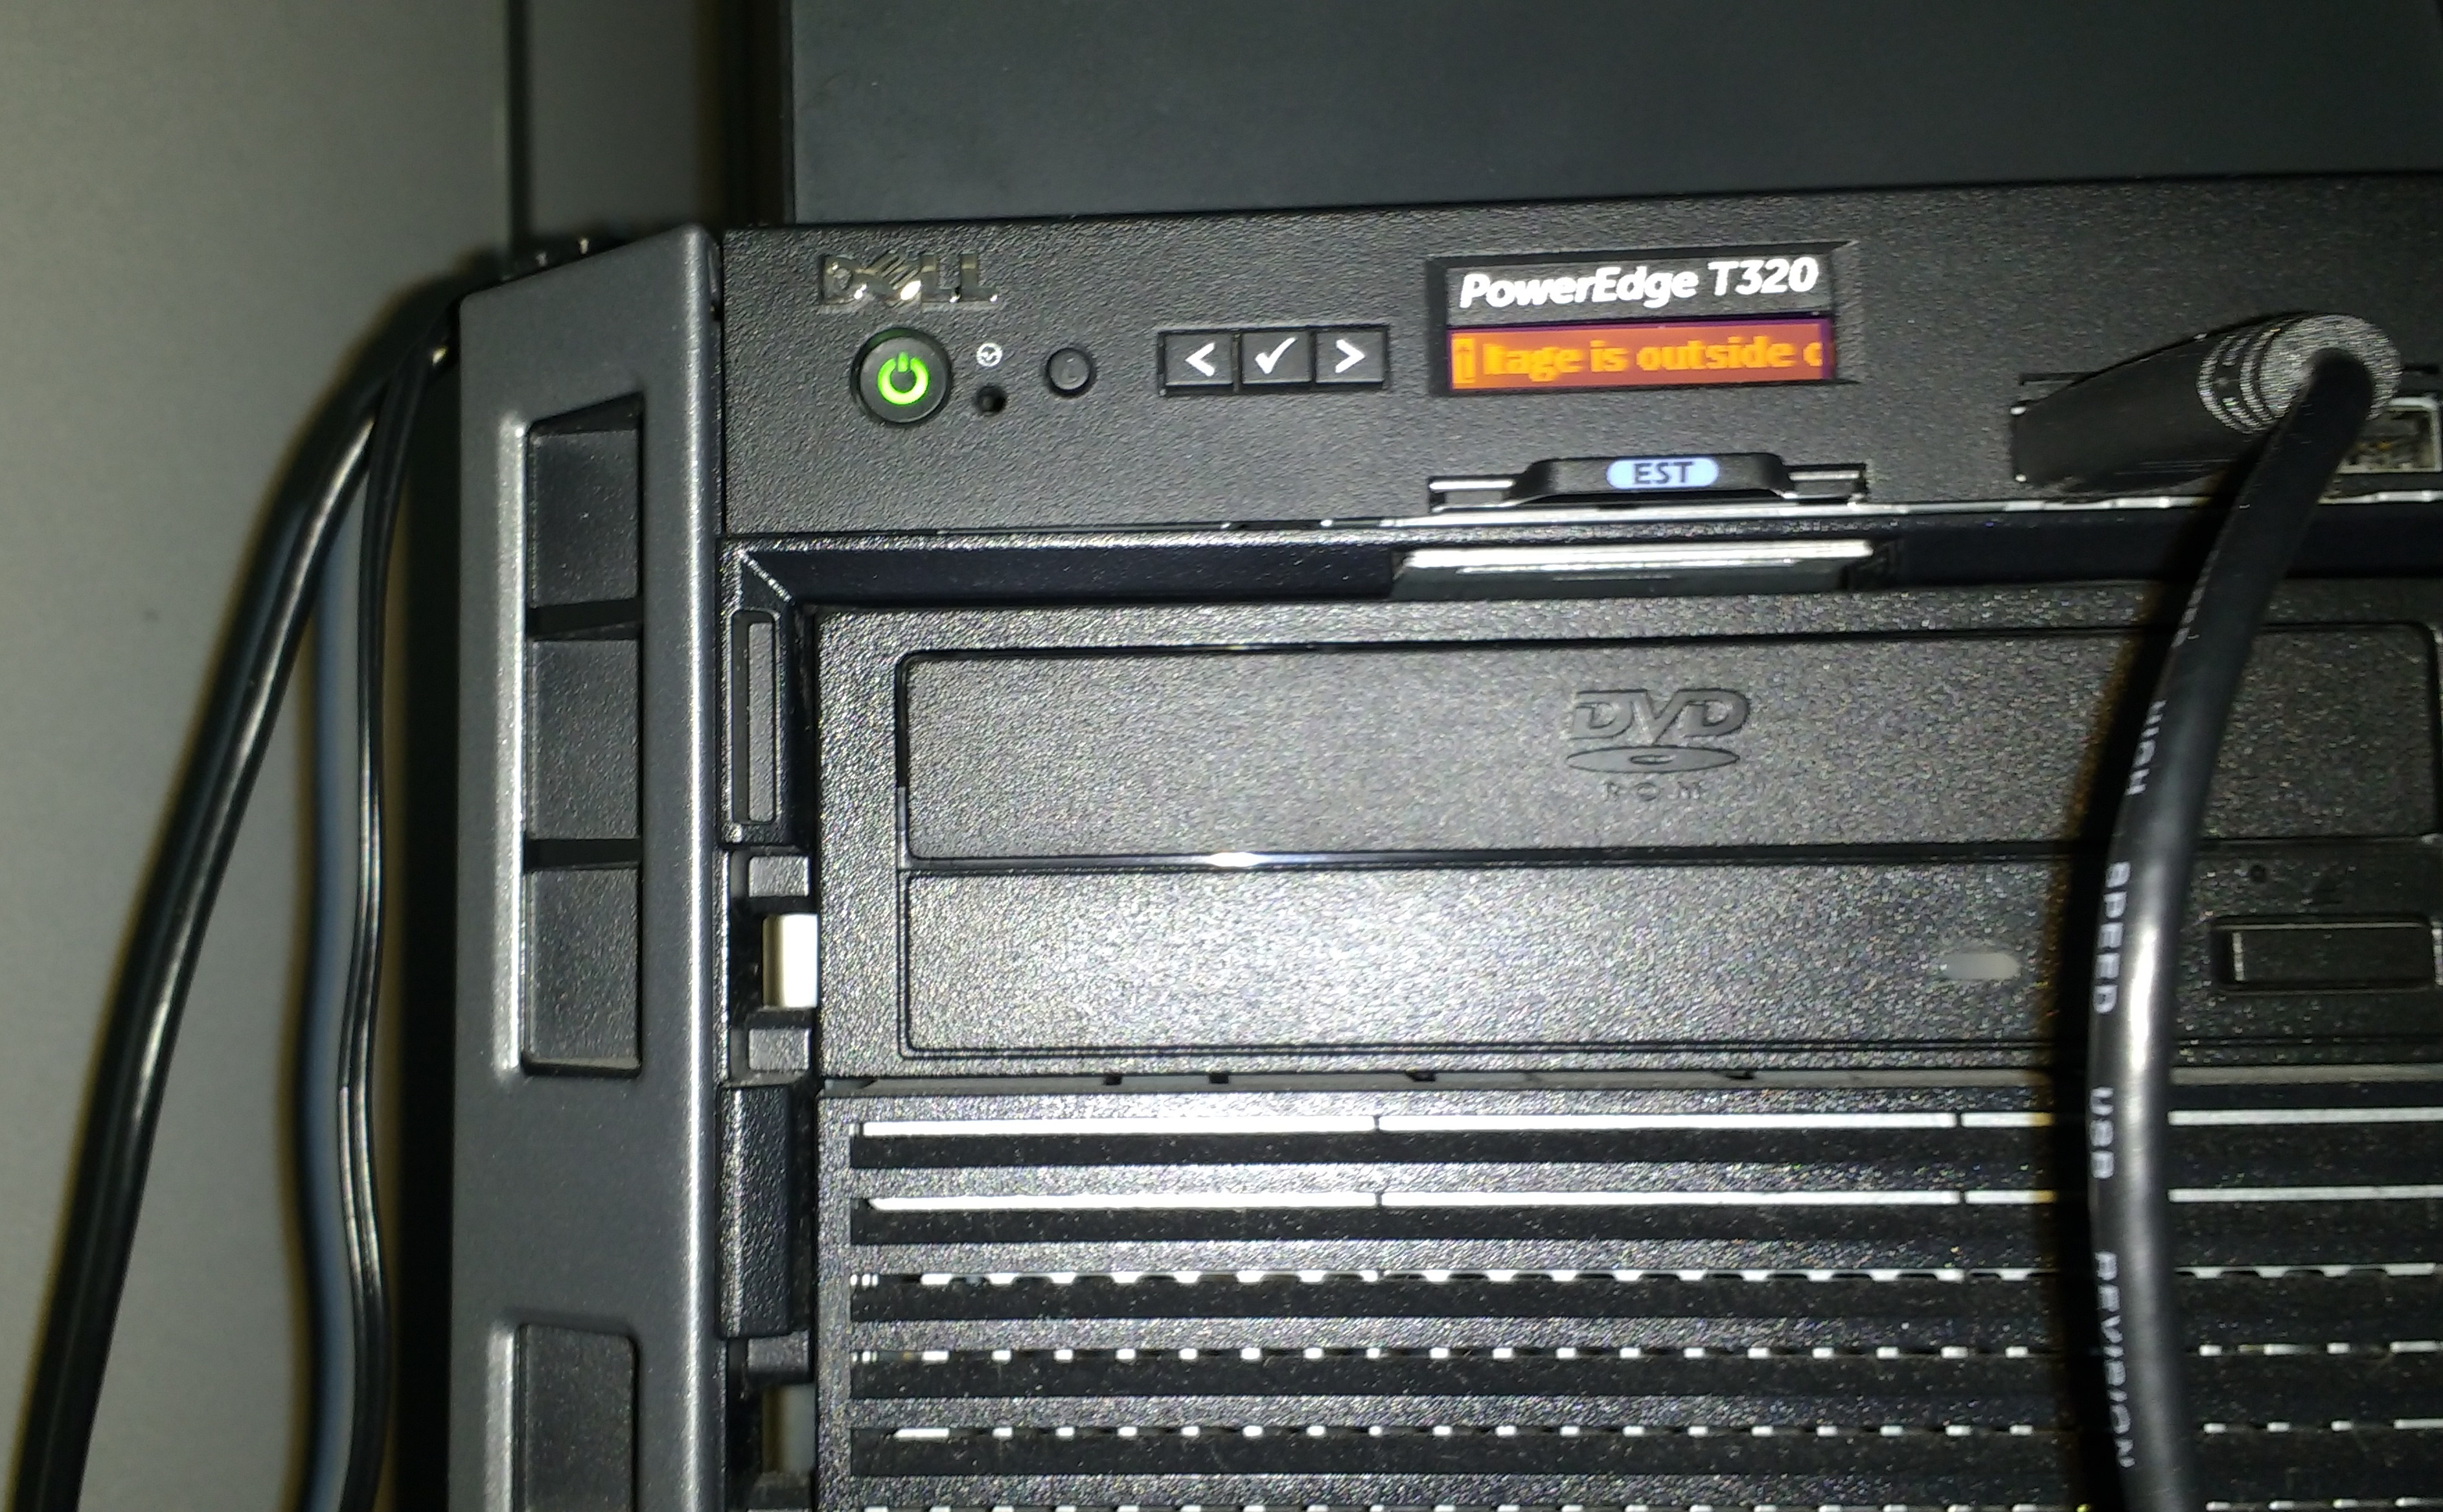 Solved: DELL PowerEdge T320 Server VLT0204 PS2 PG Fail Voltage Is ...